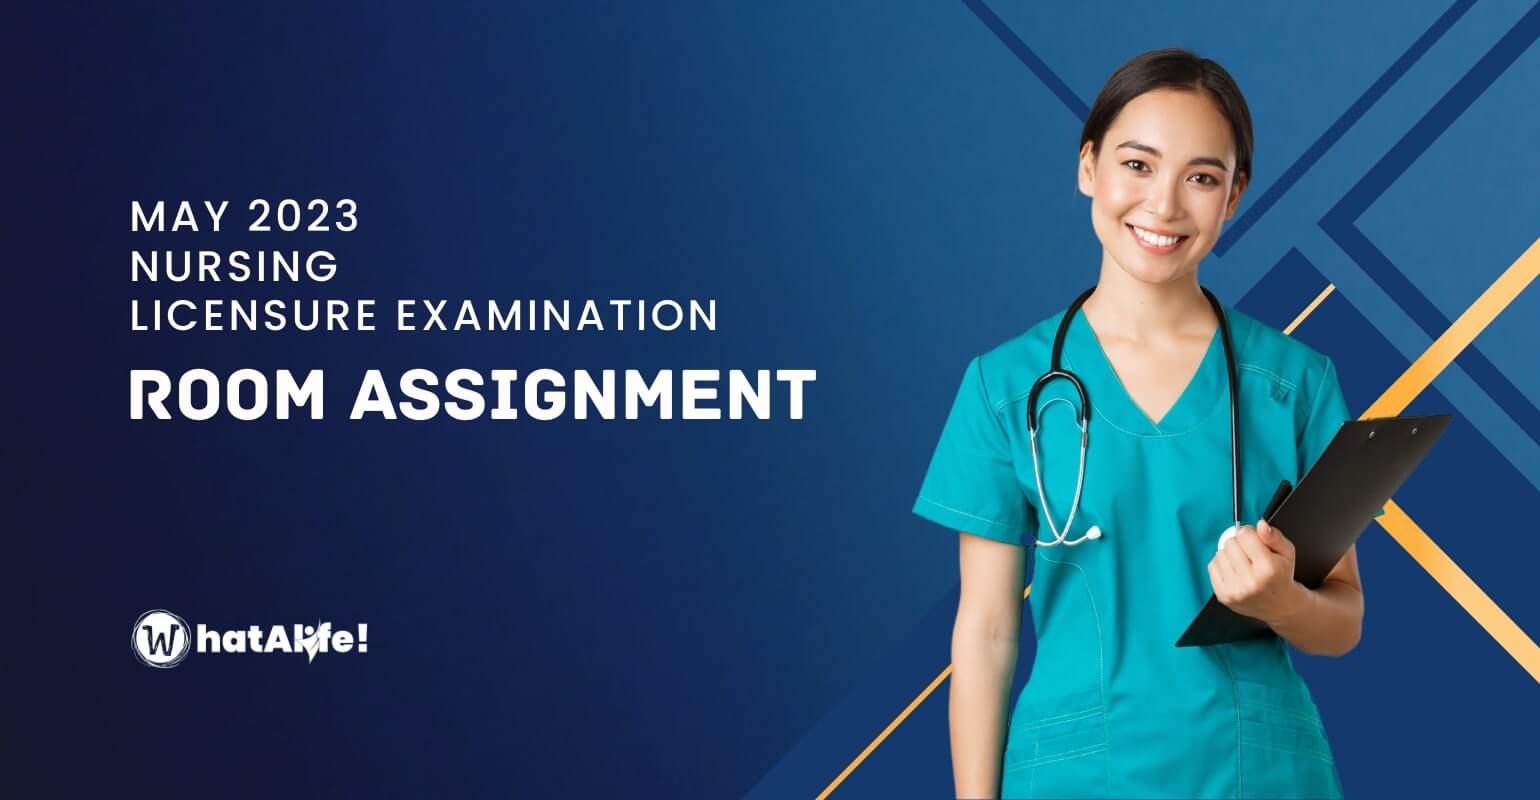 room assignment may 2023 nursing licensure exam